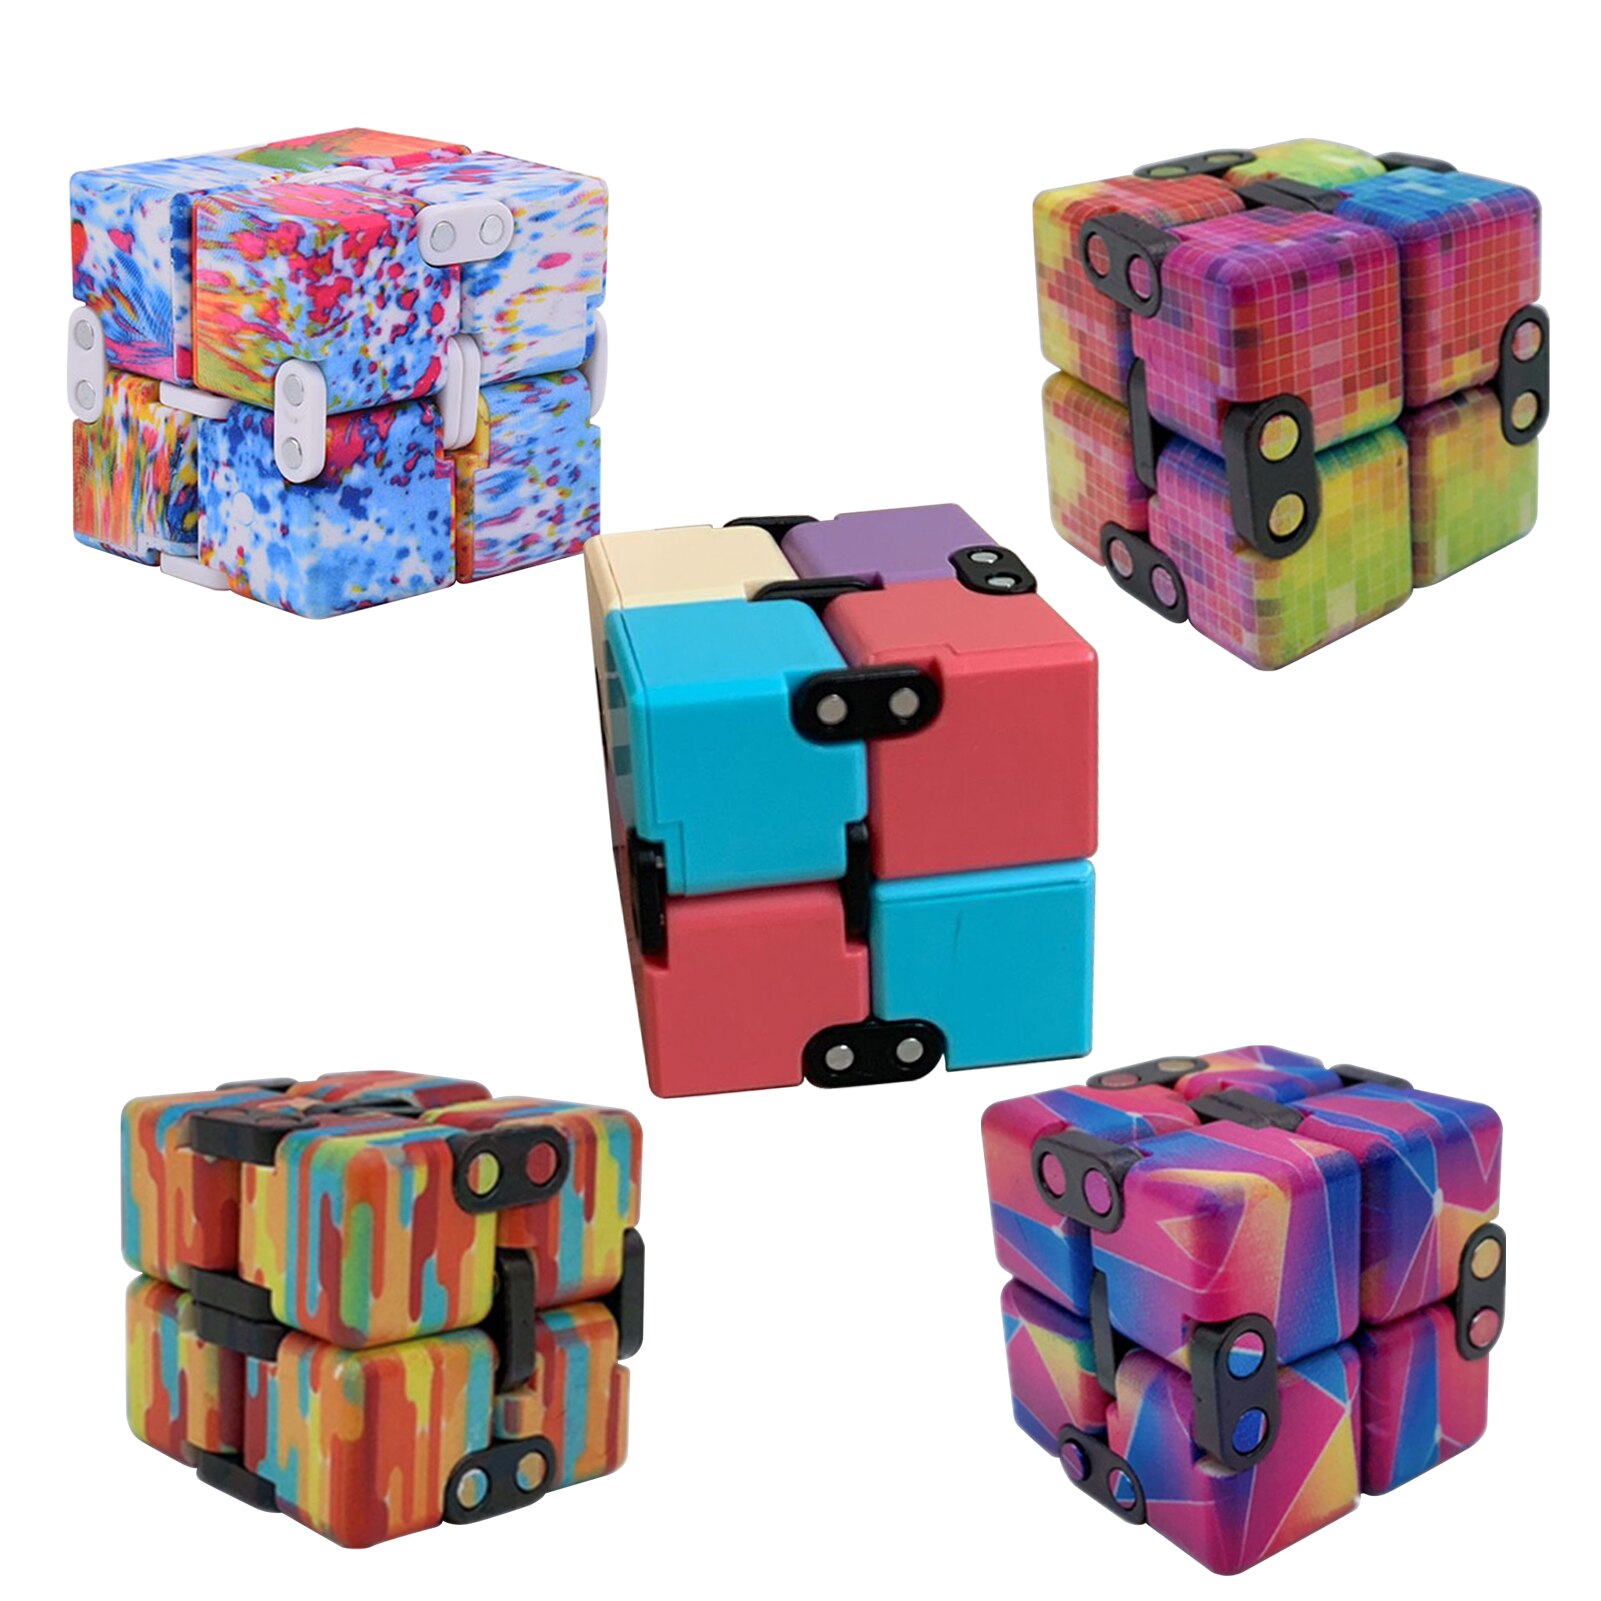 Creative Infinite Cube Infinity Cube Magic Cube Office Flip Cubic Puzzle Stop Stress Reliever Autism Toys 1 - Simple Dimple Fidget